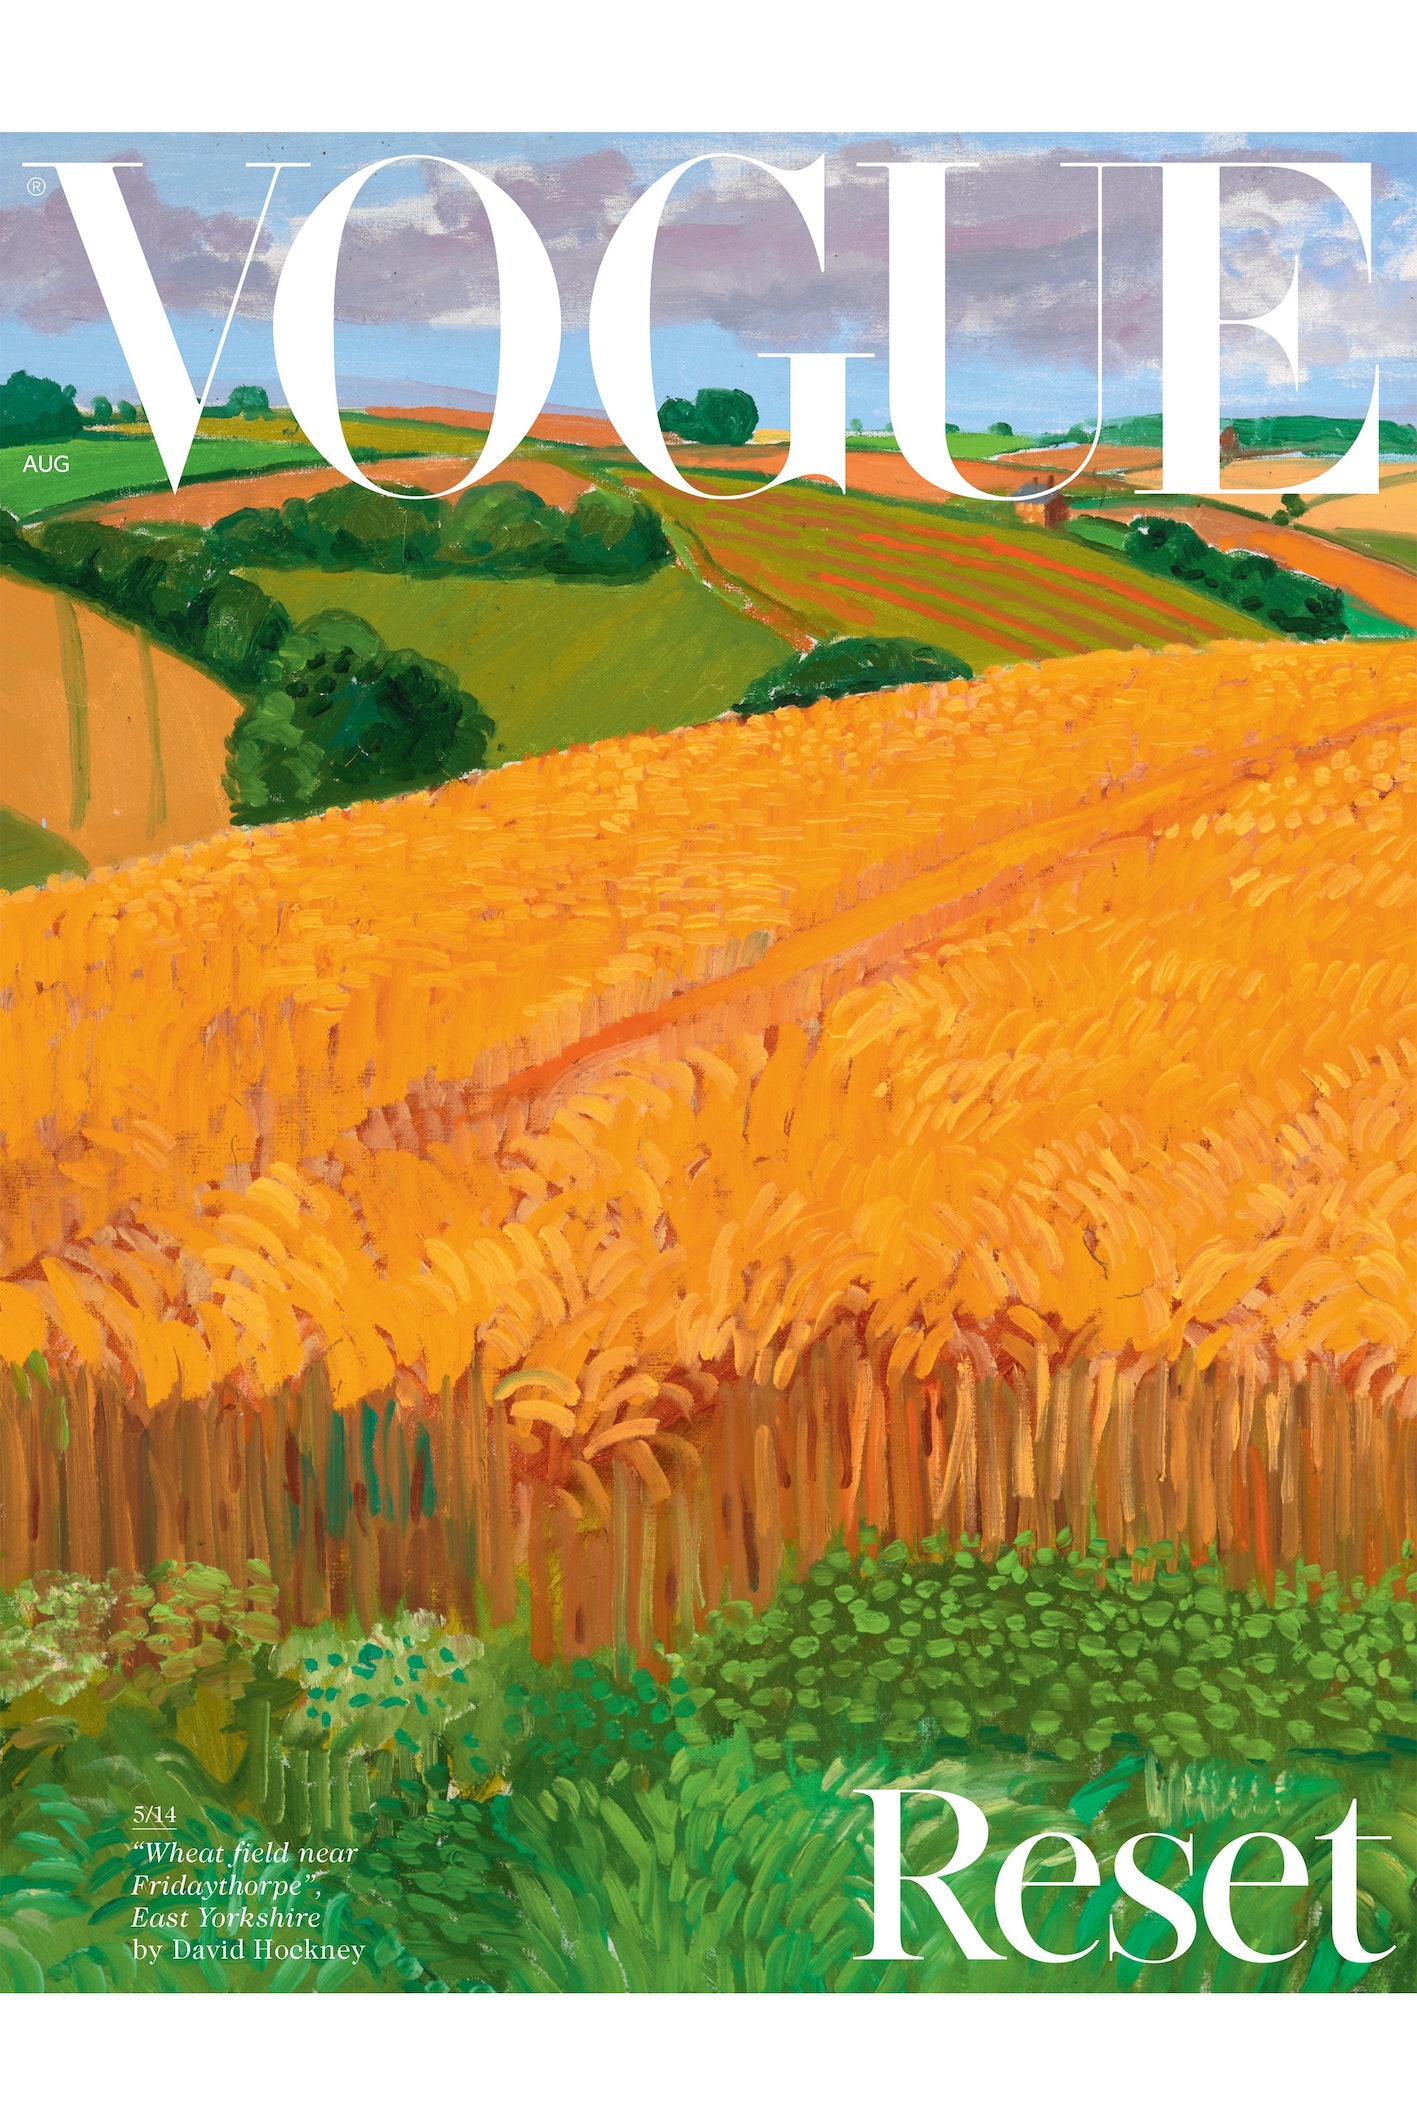 La cover di David Hockney per British Vogue - immagine via www.vogue.co.uk